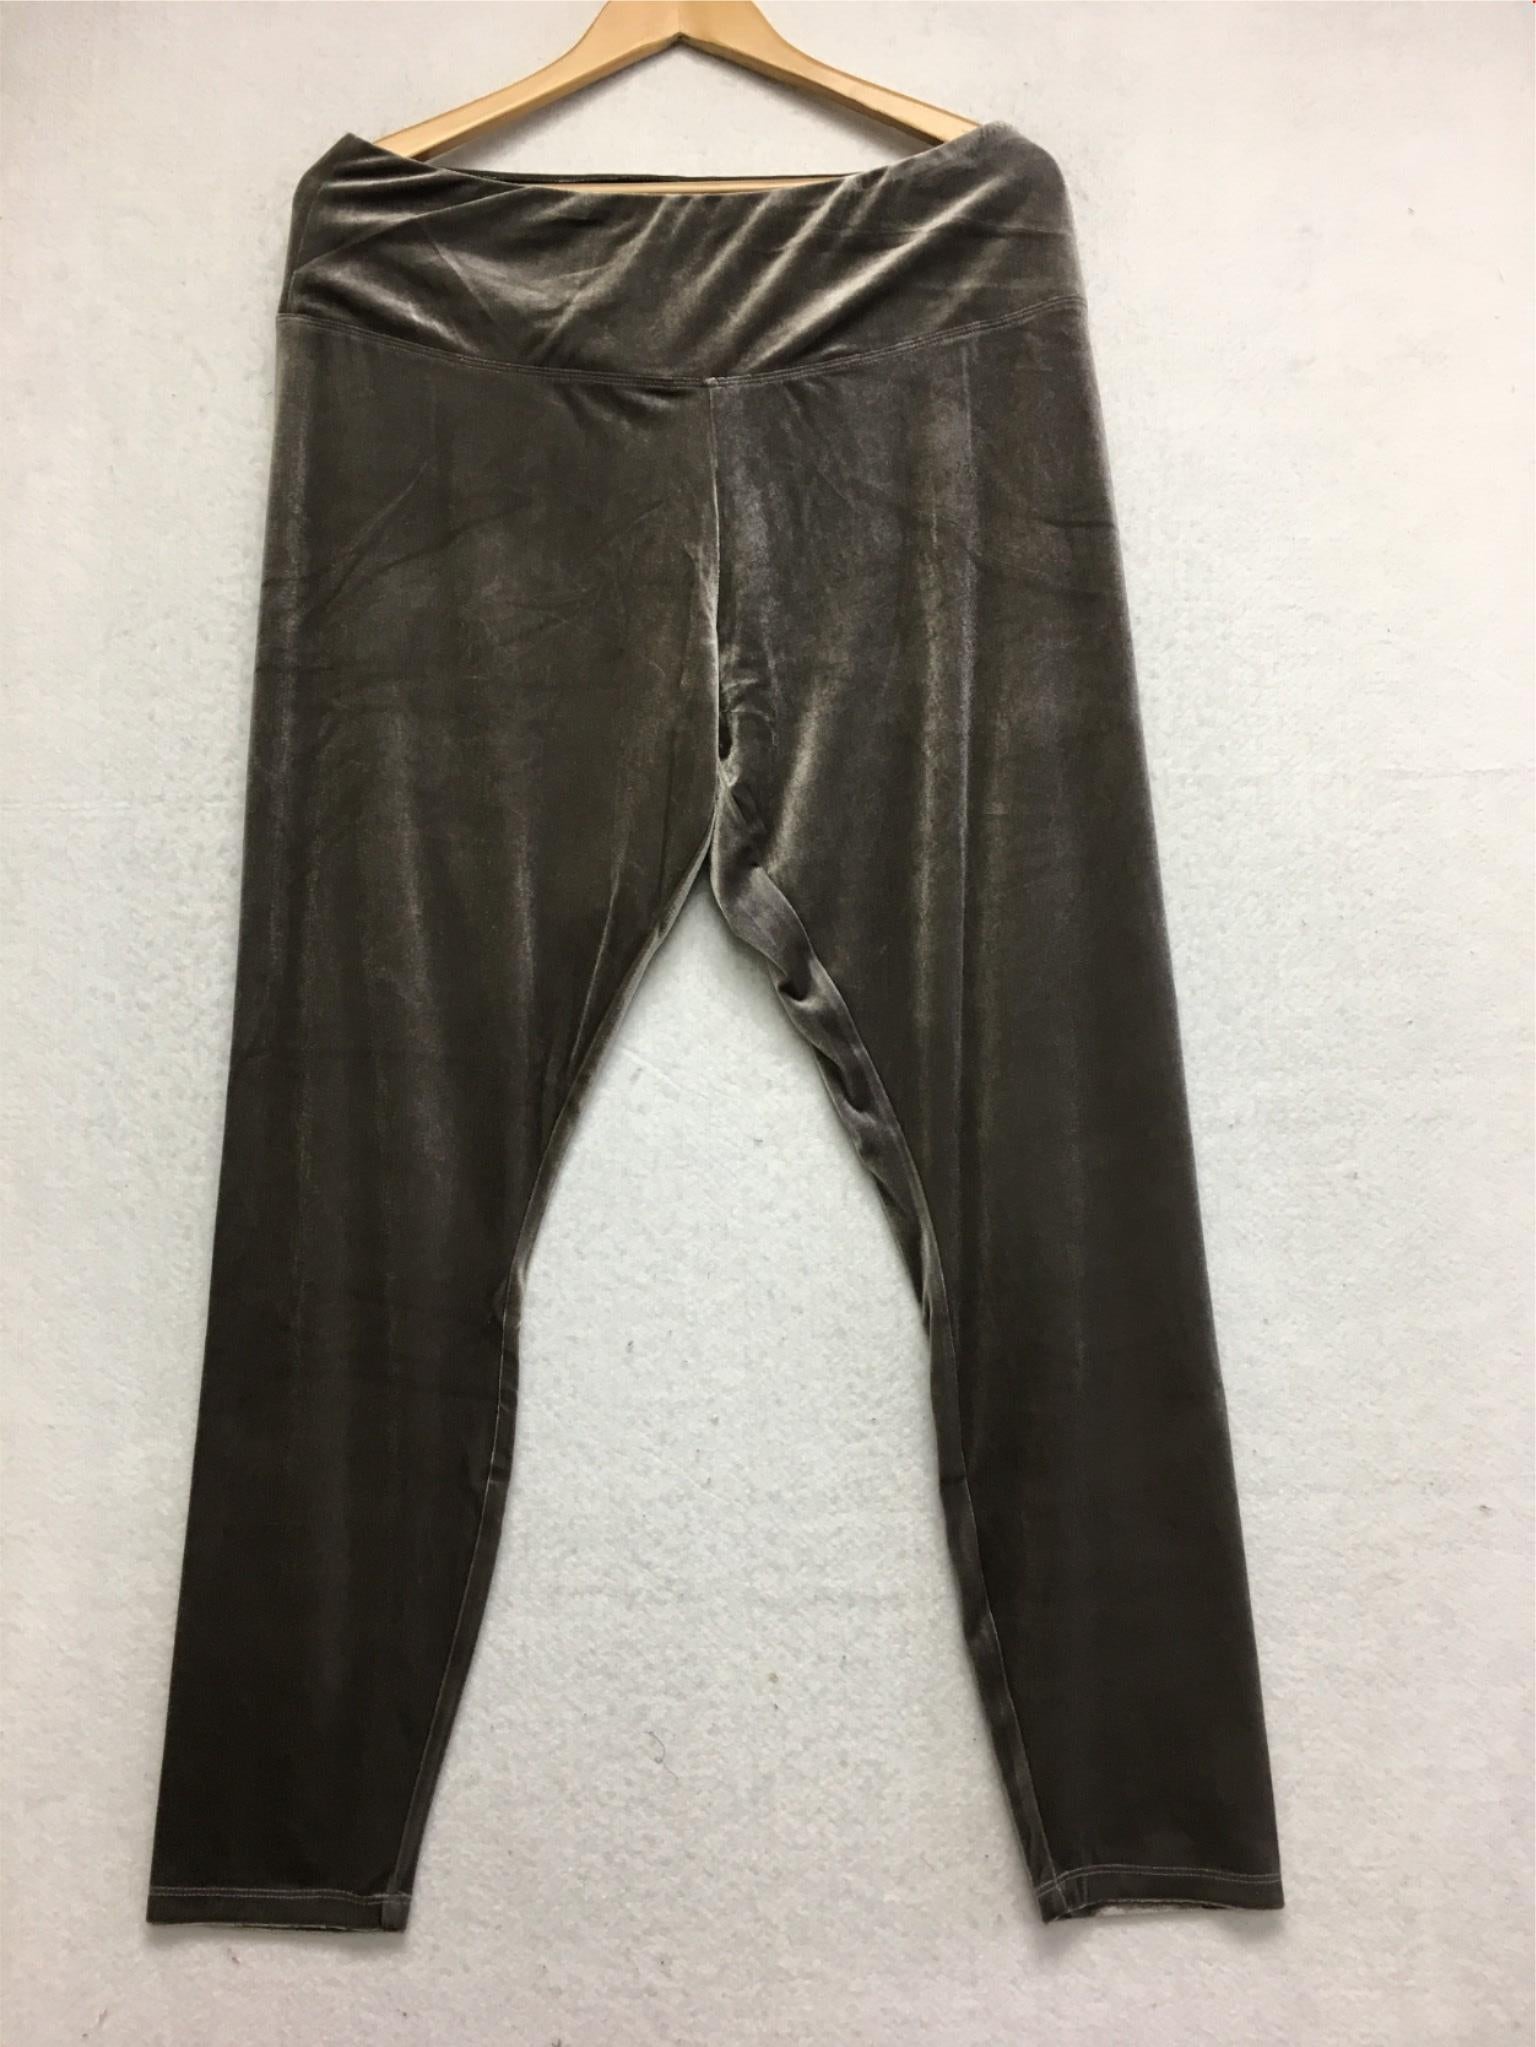 New MARLA WYNNE Women's Velvet Pants in Taupe 3X